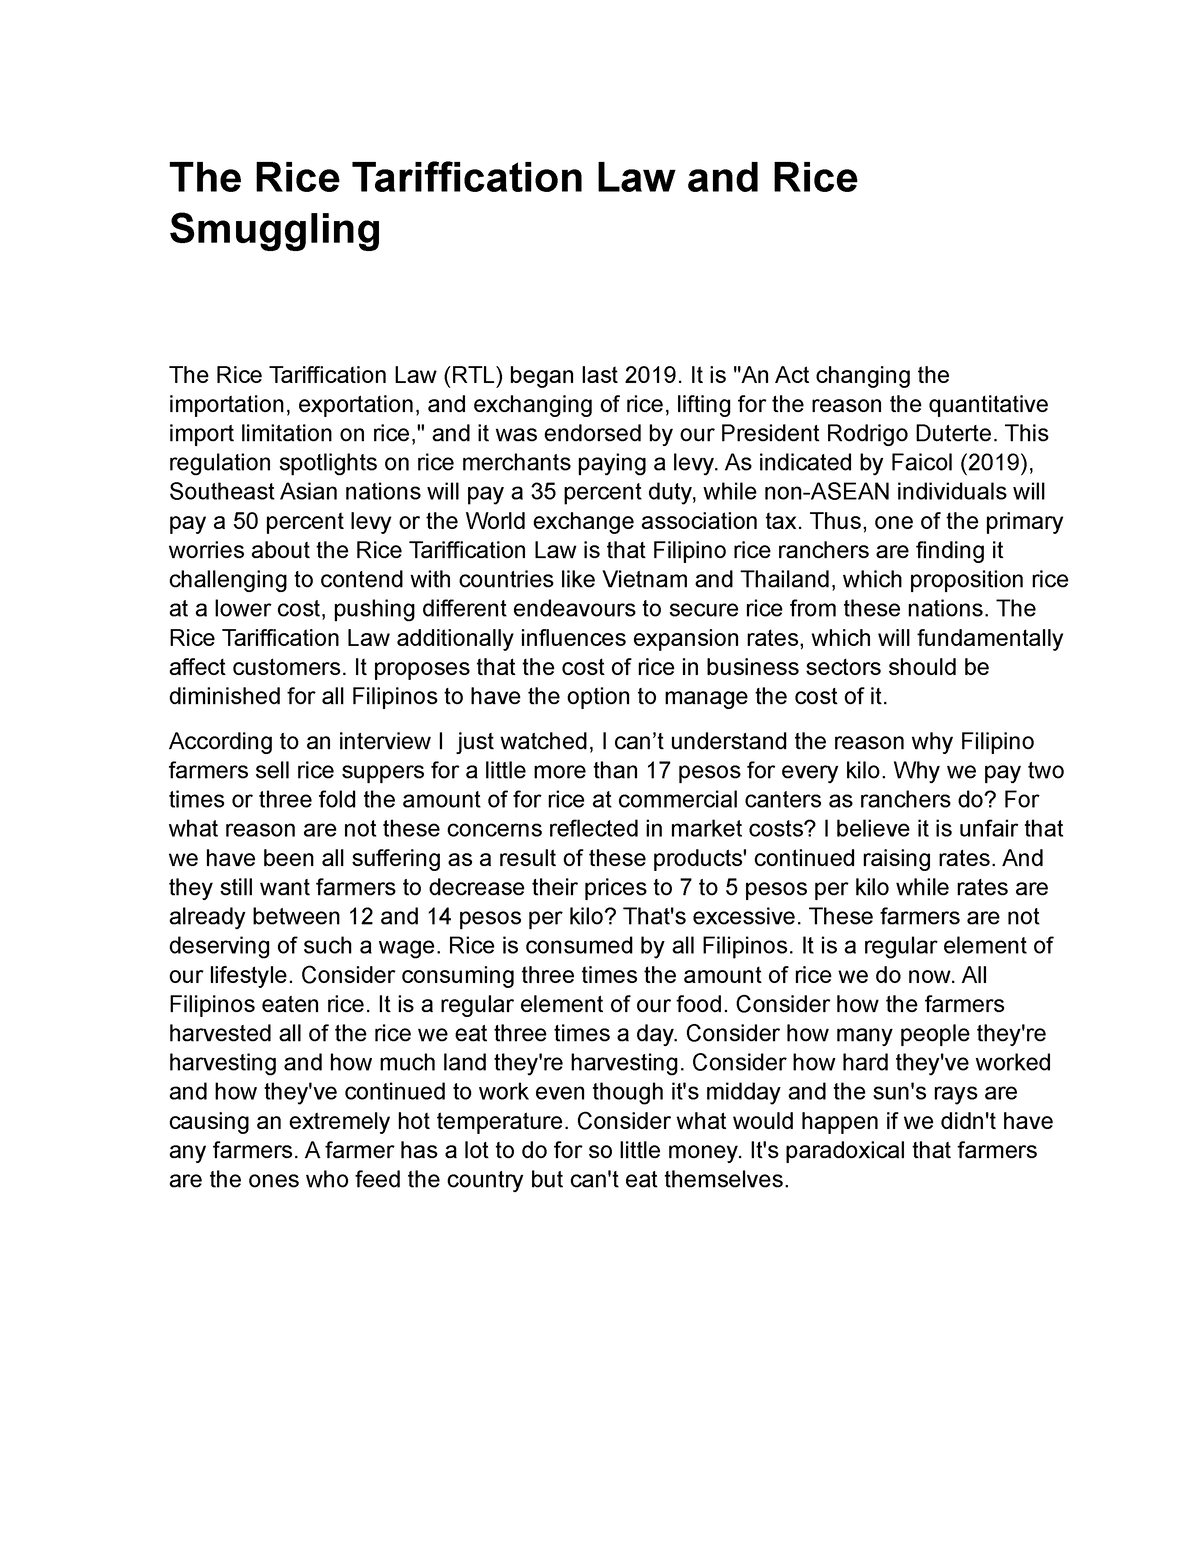 rice smuggling essay